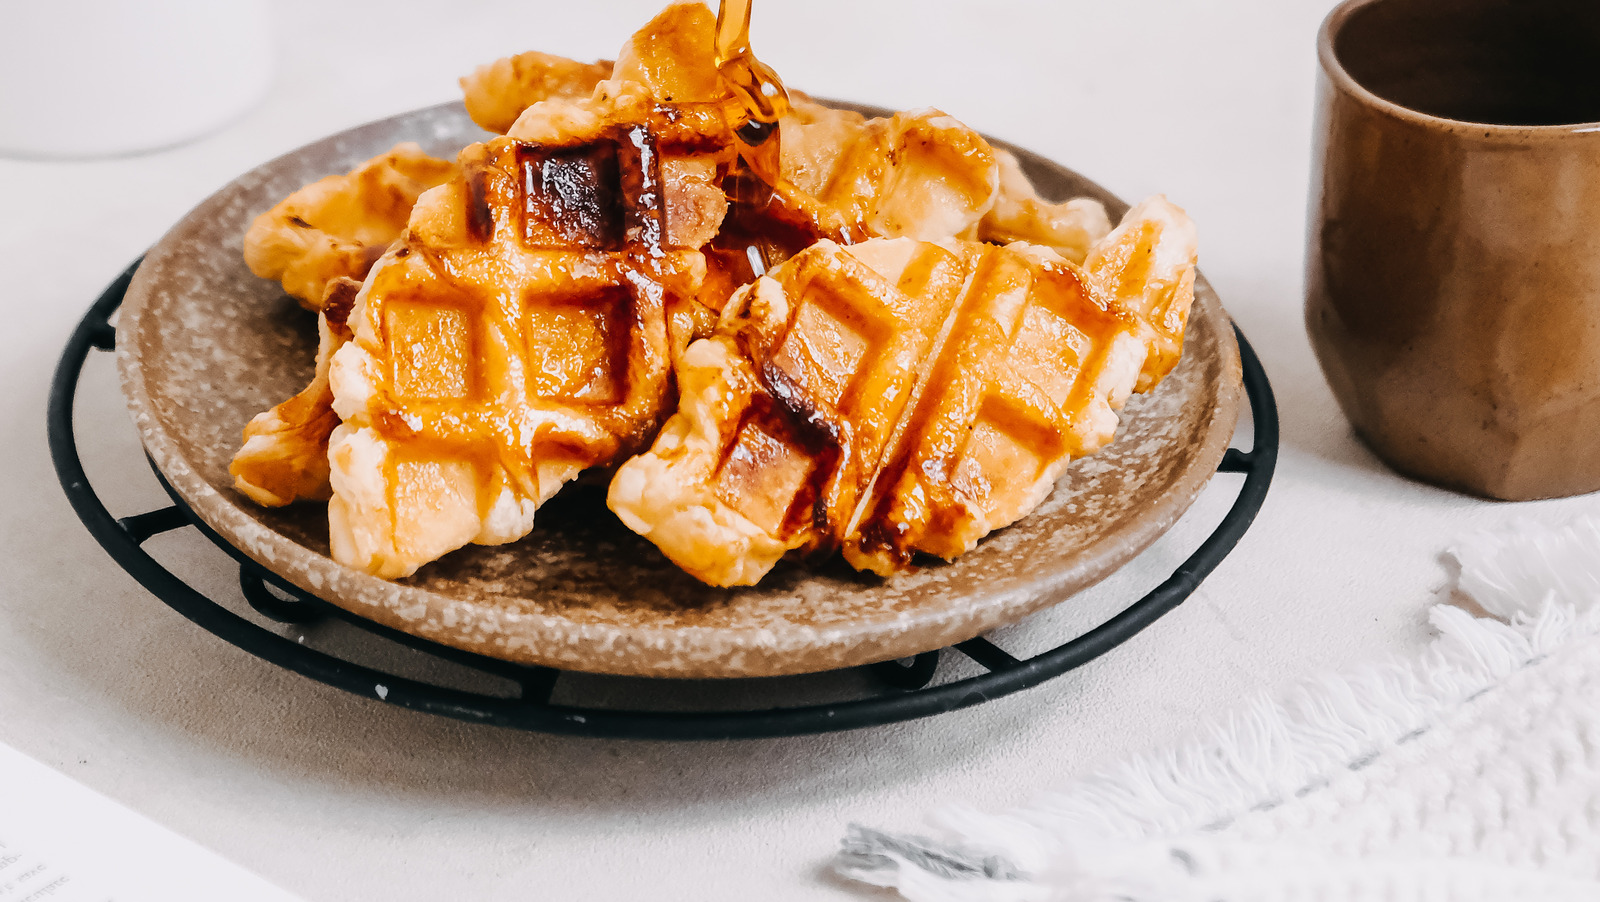 Mini Waffles - Your Diet Plan